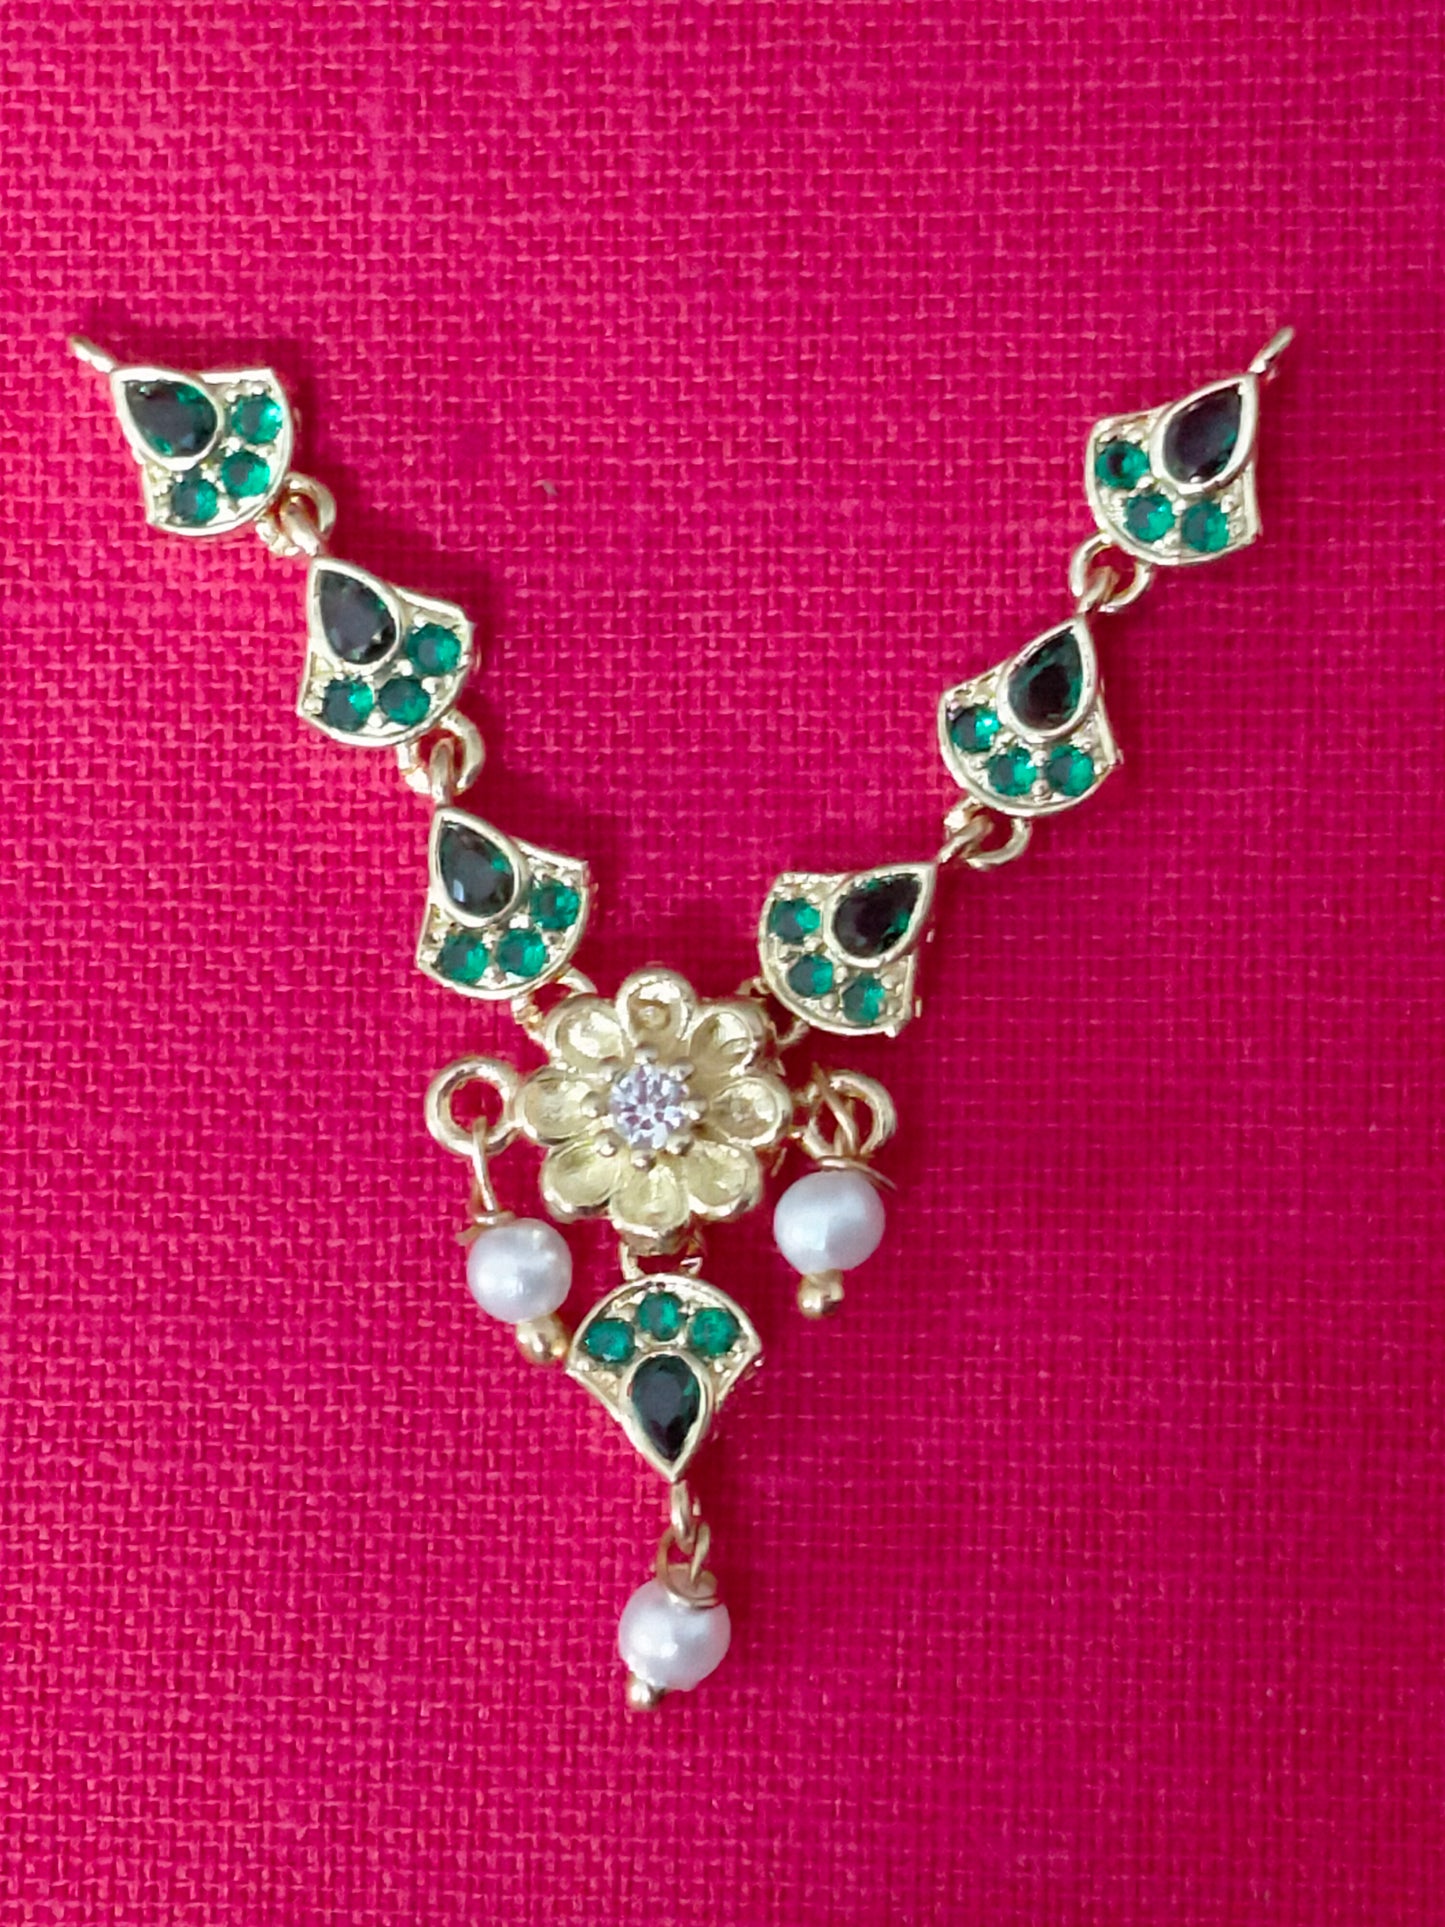 Latest design artificial stone mala/ necklace